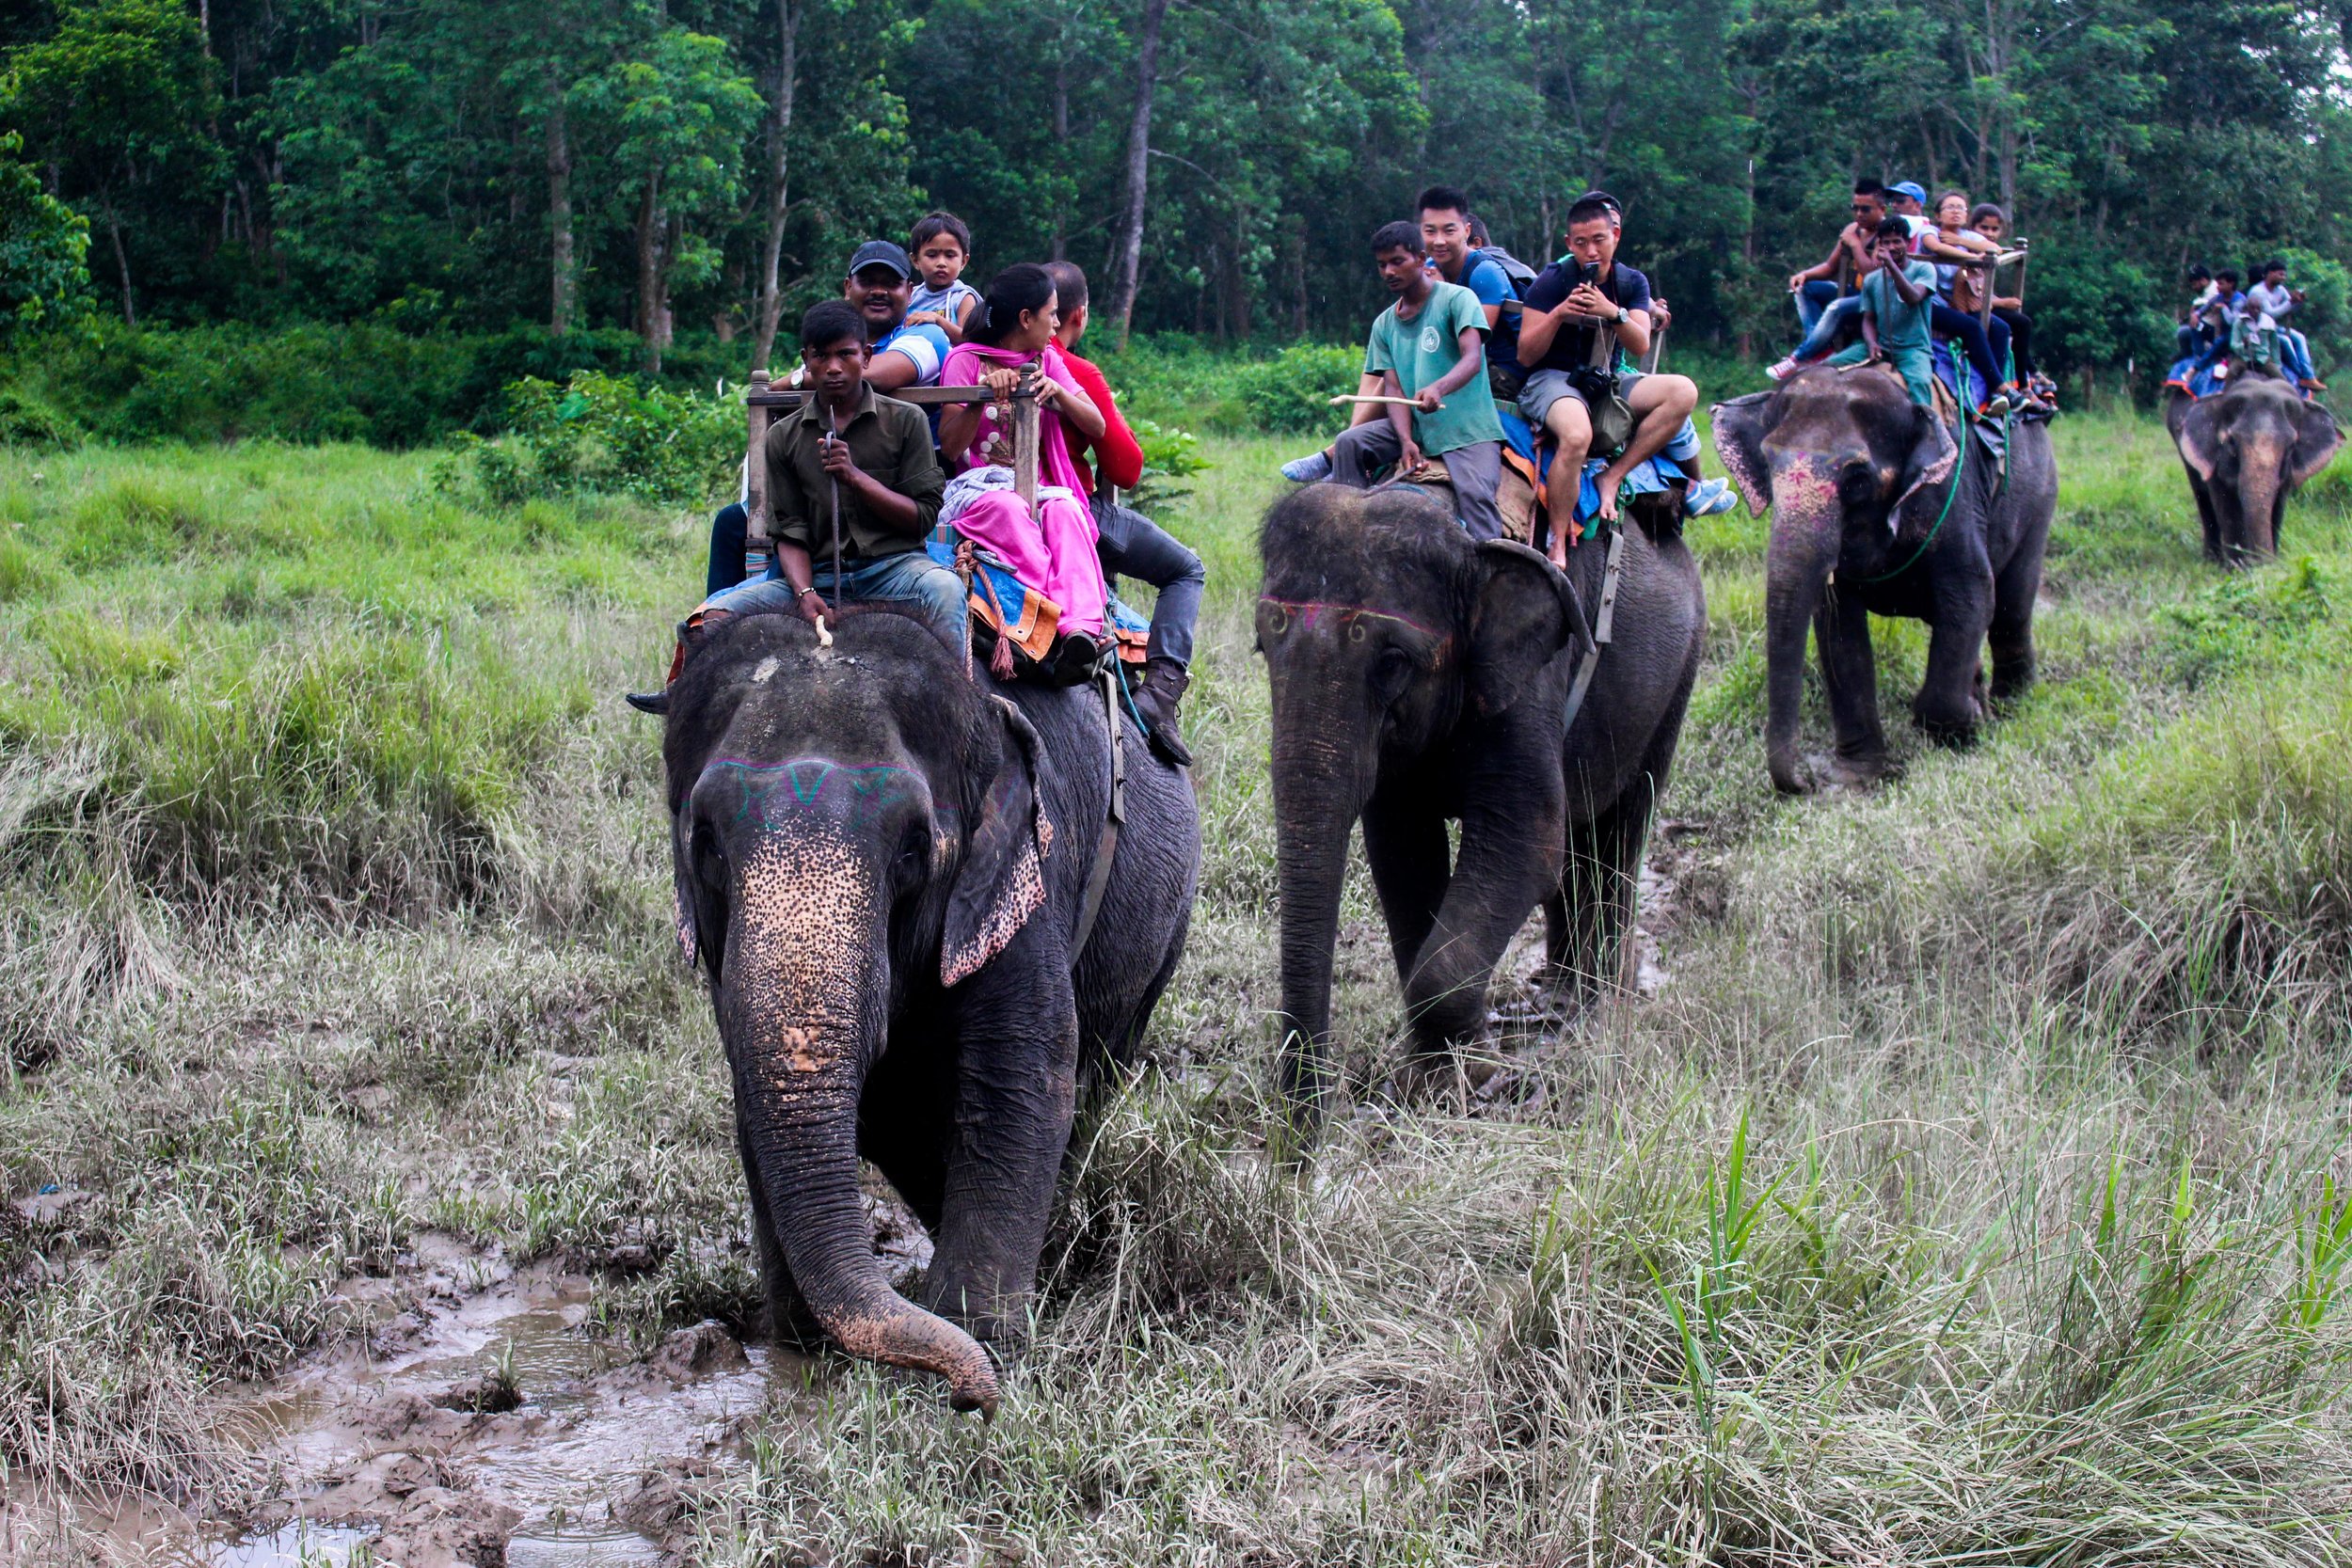 Elephants in Thailand 'Broken' for Lucrative Animal Tourism